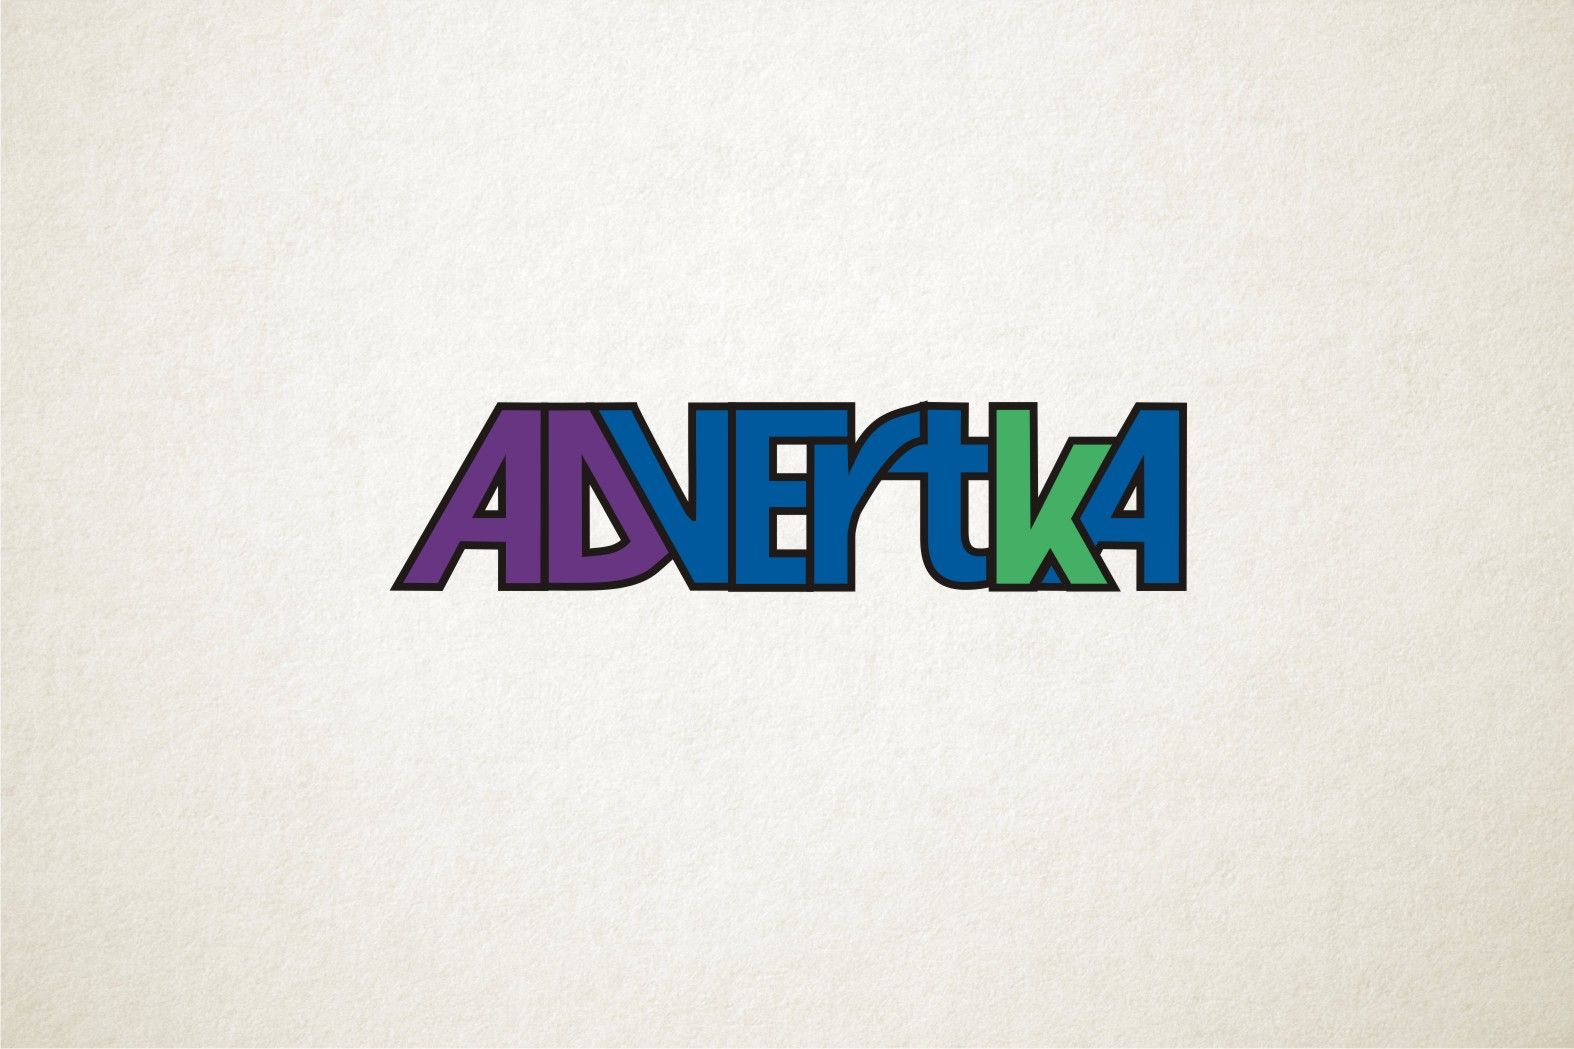 логотип для интернет агентства ADvertka - дизайнер Evgenia_021